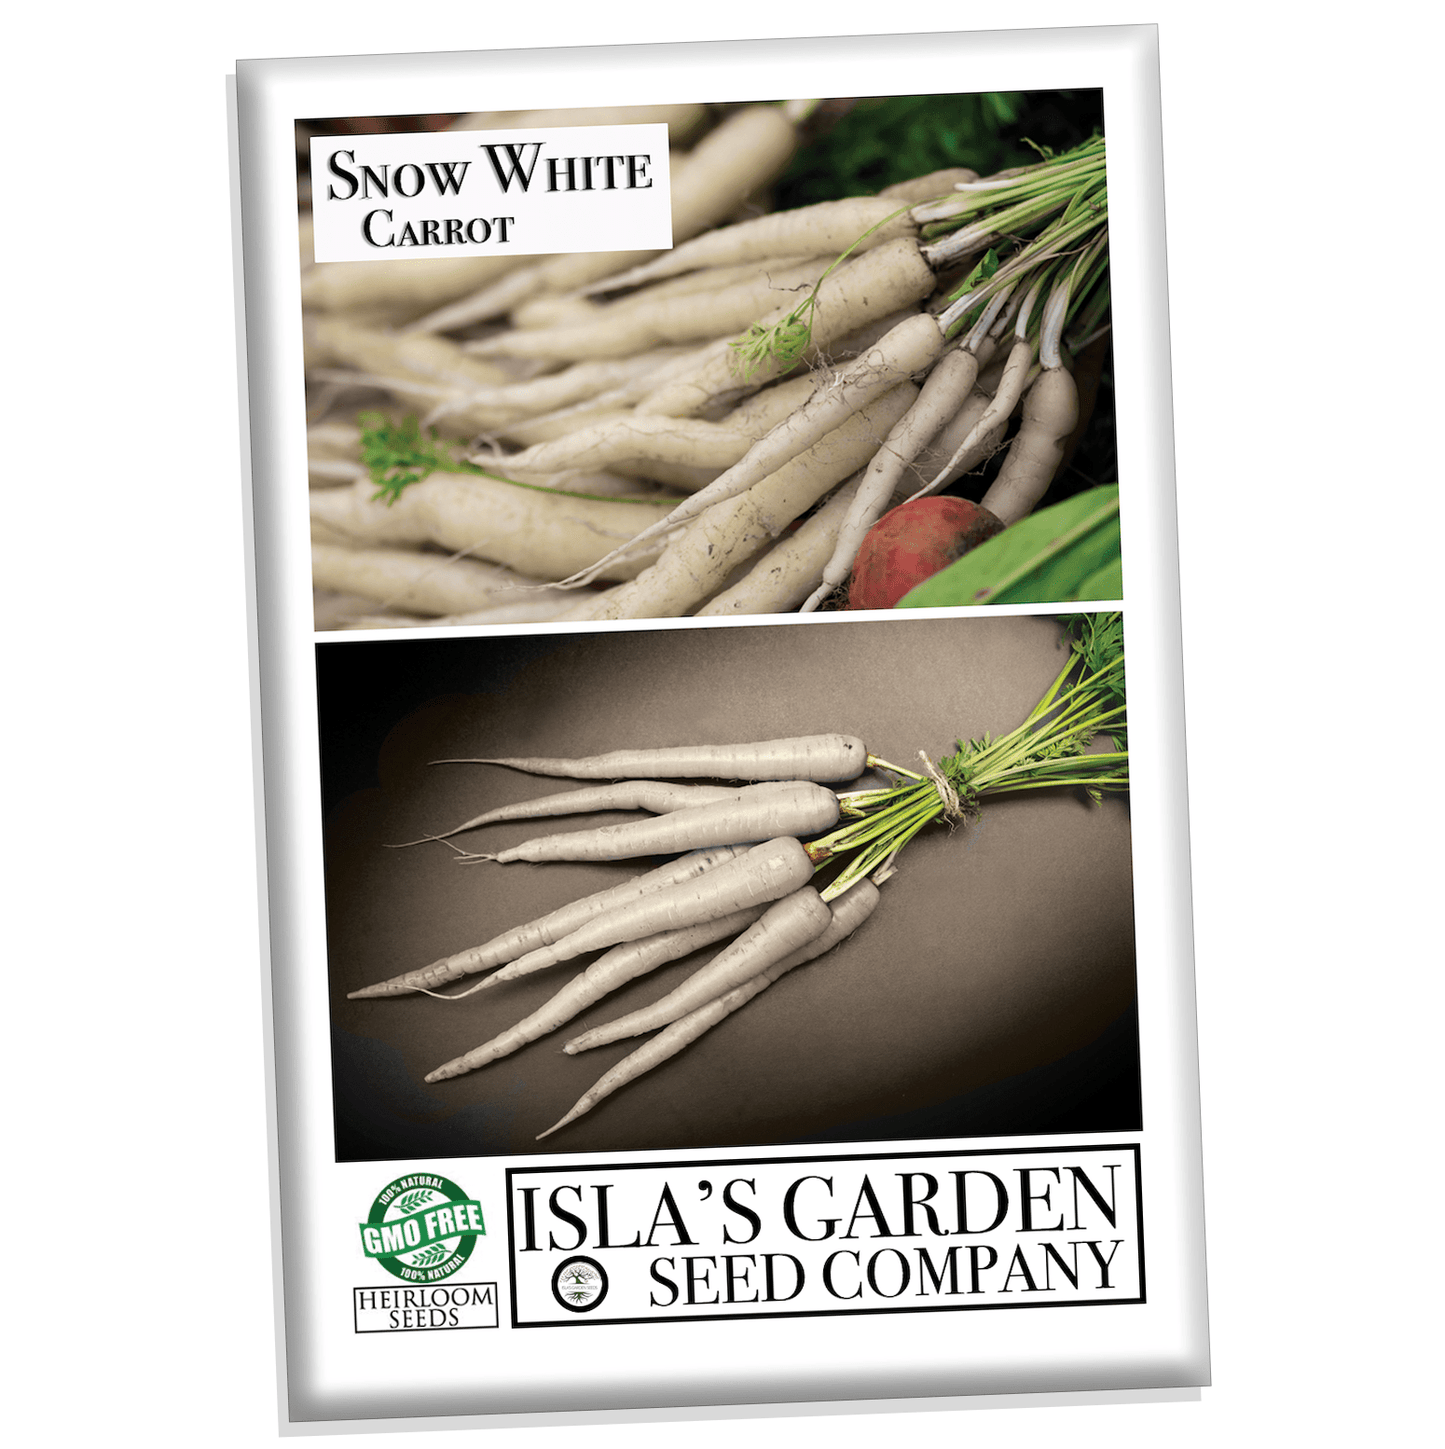 Snow White Carrot Seeds, 350 Heirloom Seeds Per Packet, Non GMO Seeds, Botanical Name: Daucus carota subsp. sativus